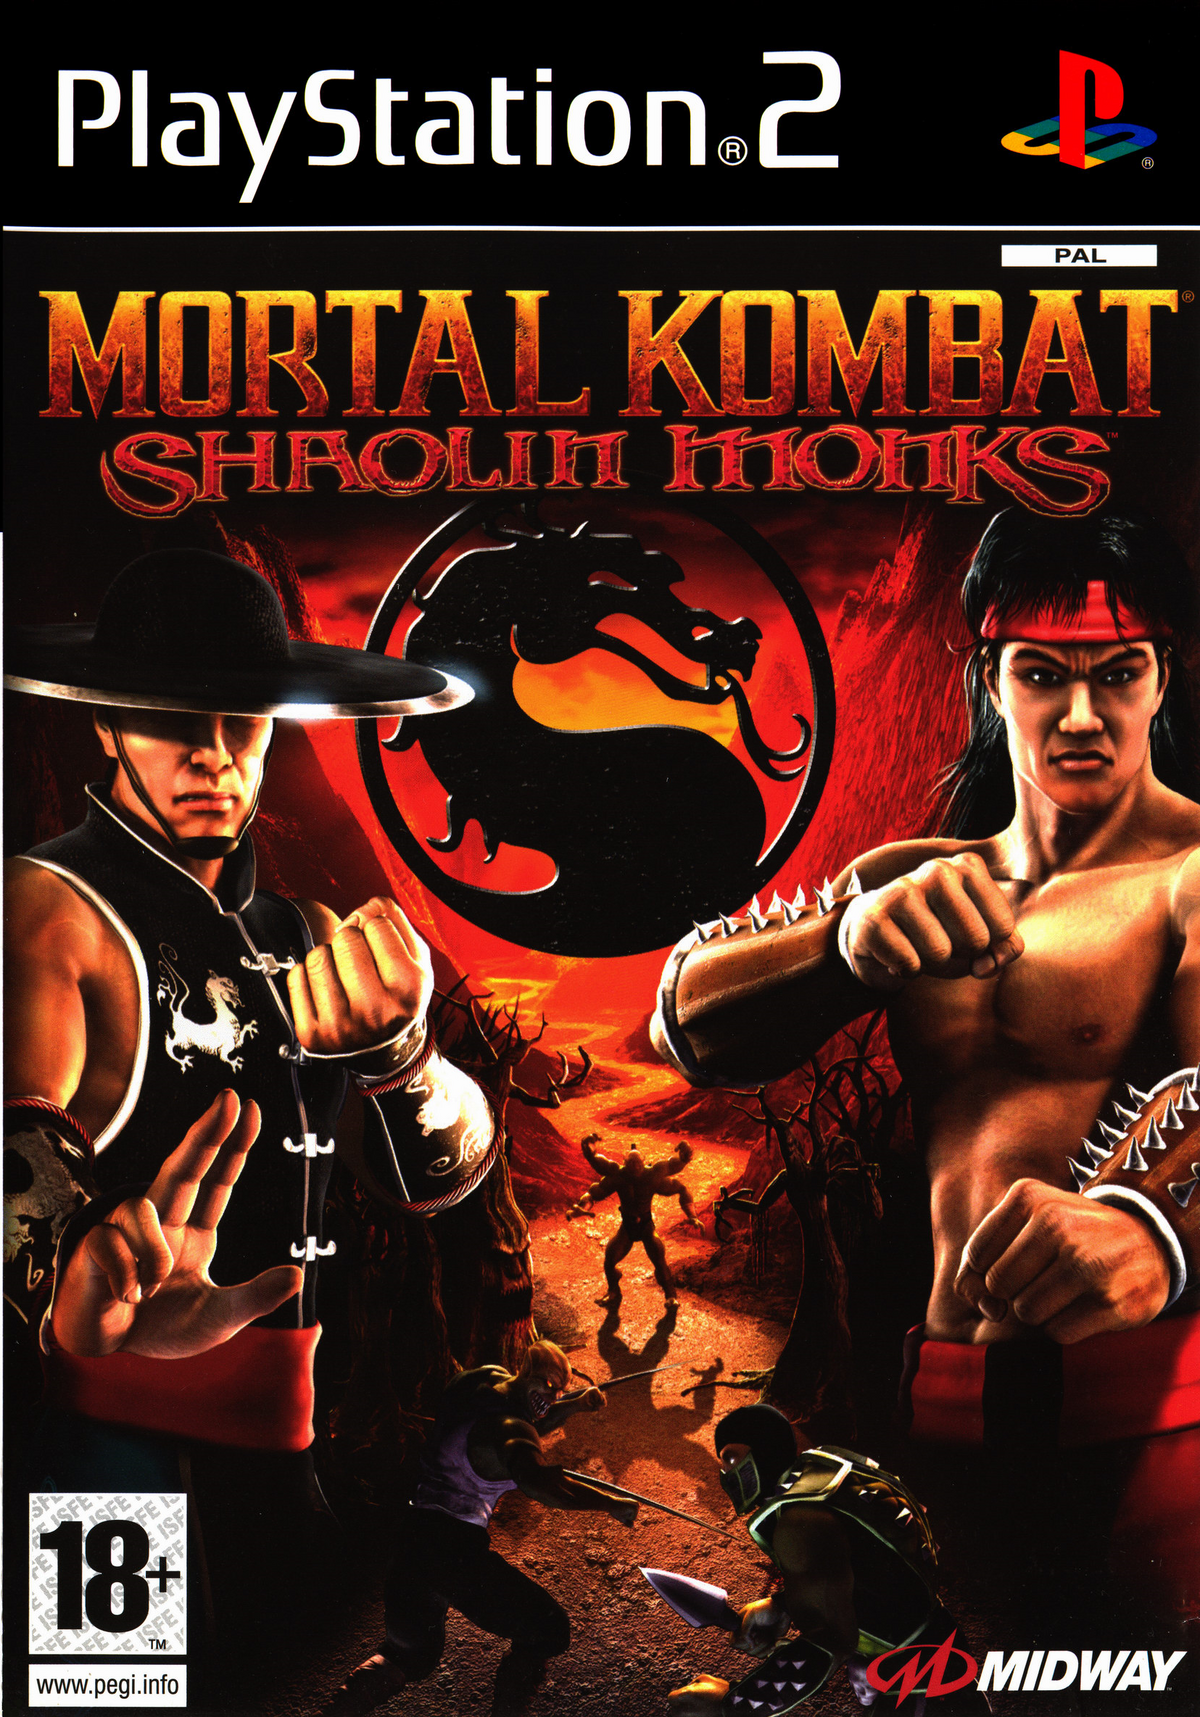 Mortal Kombat Armageddon (2021) Arcade - Baraka Playthrough - Max  Difficulty 